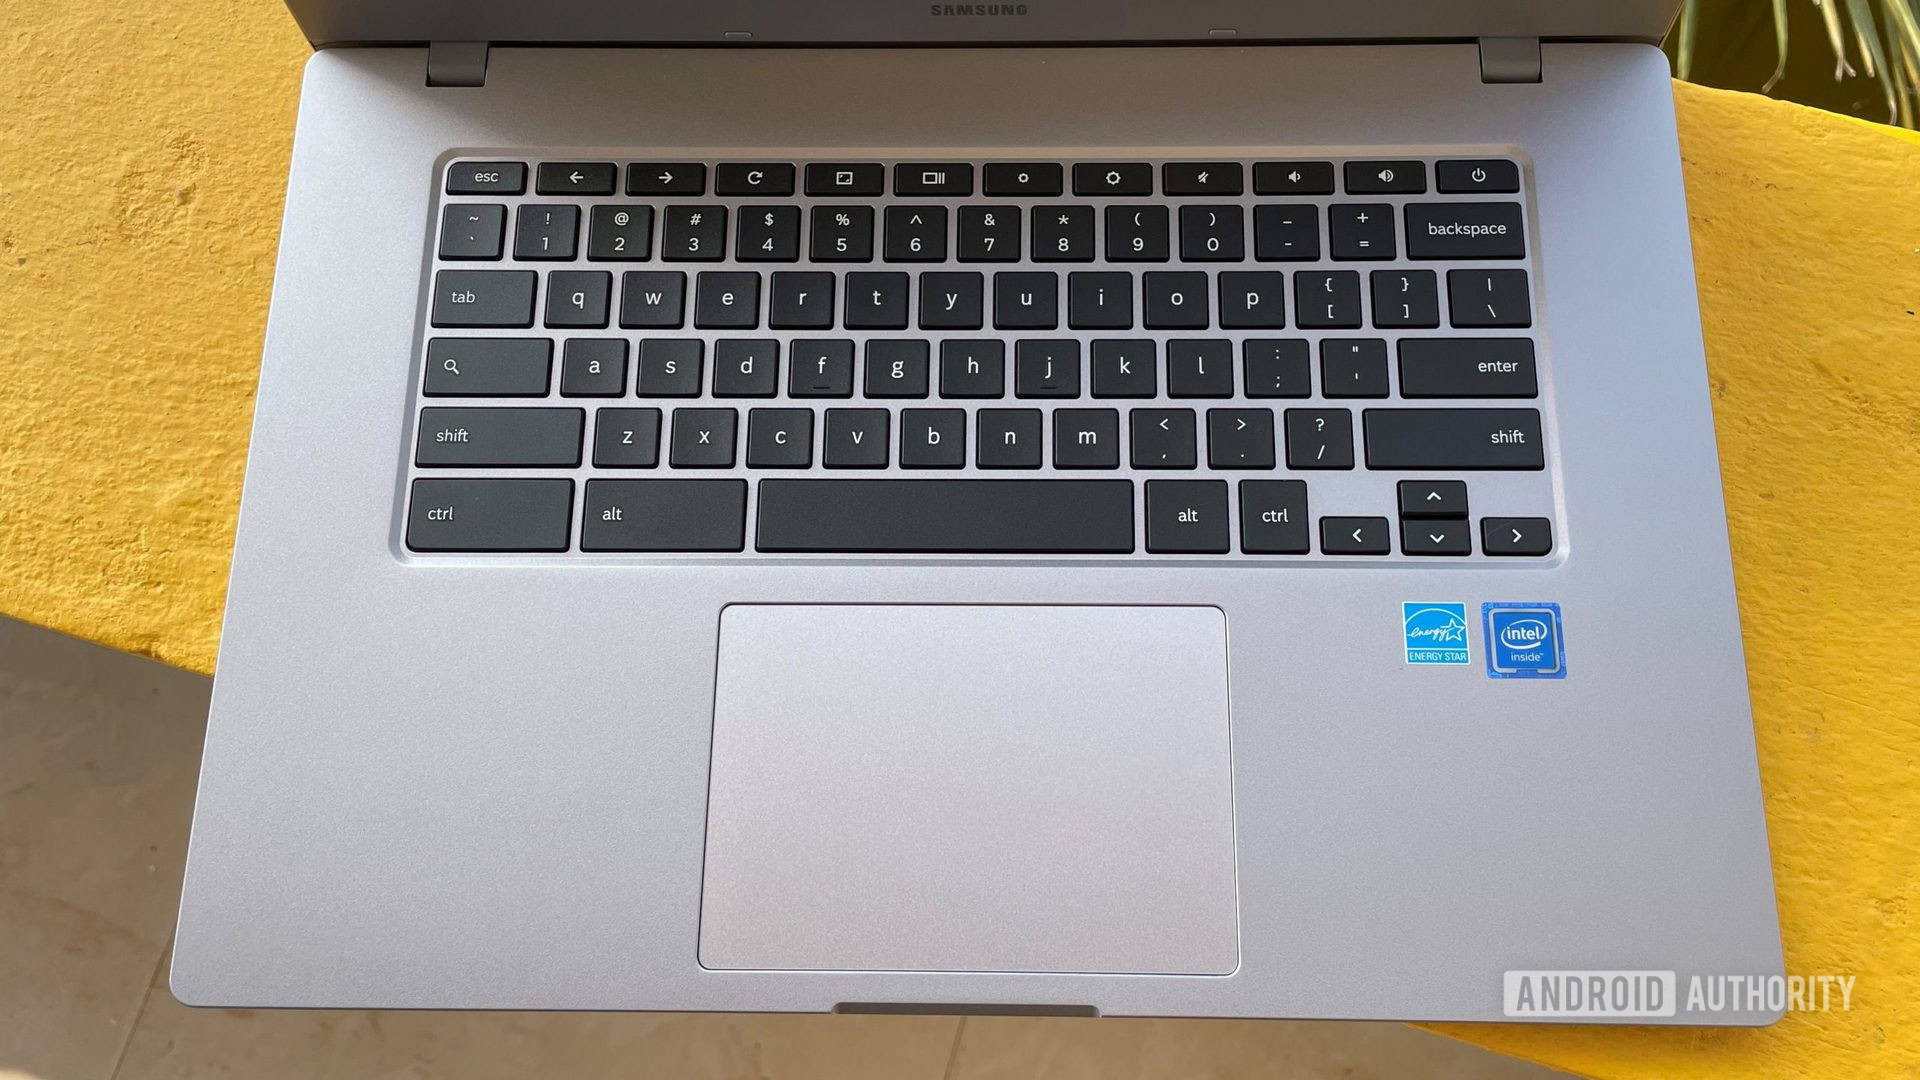 Samsung Chromebook 4 keyboard